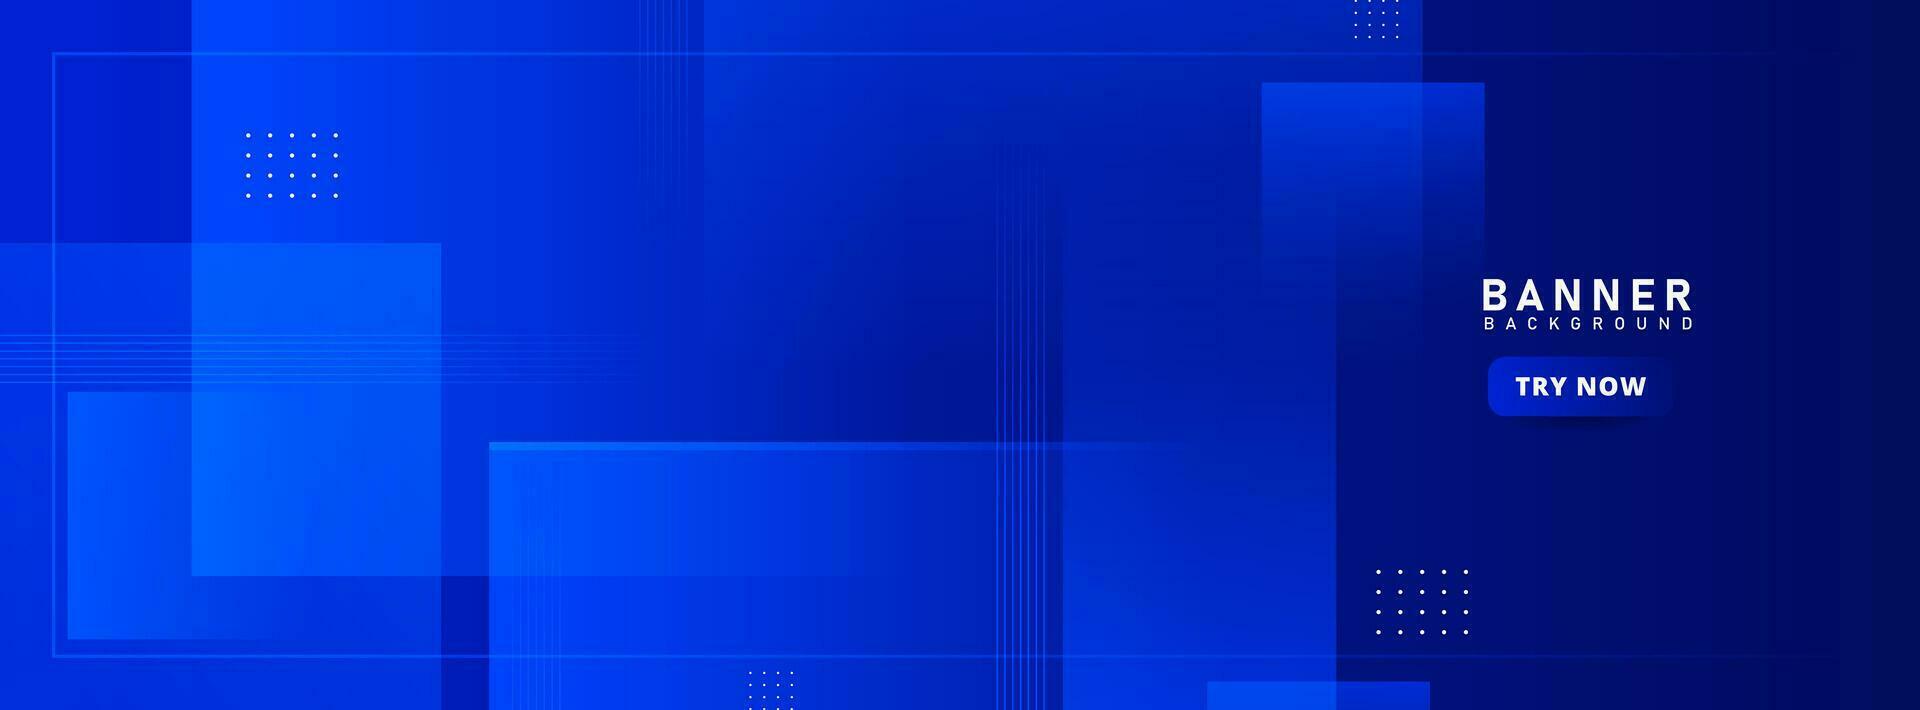 banier achtergrond. blauw gradatie. patroon. abstract vector